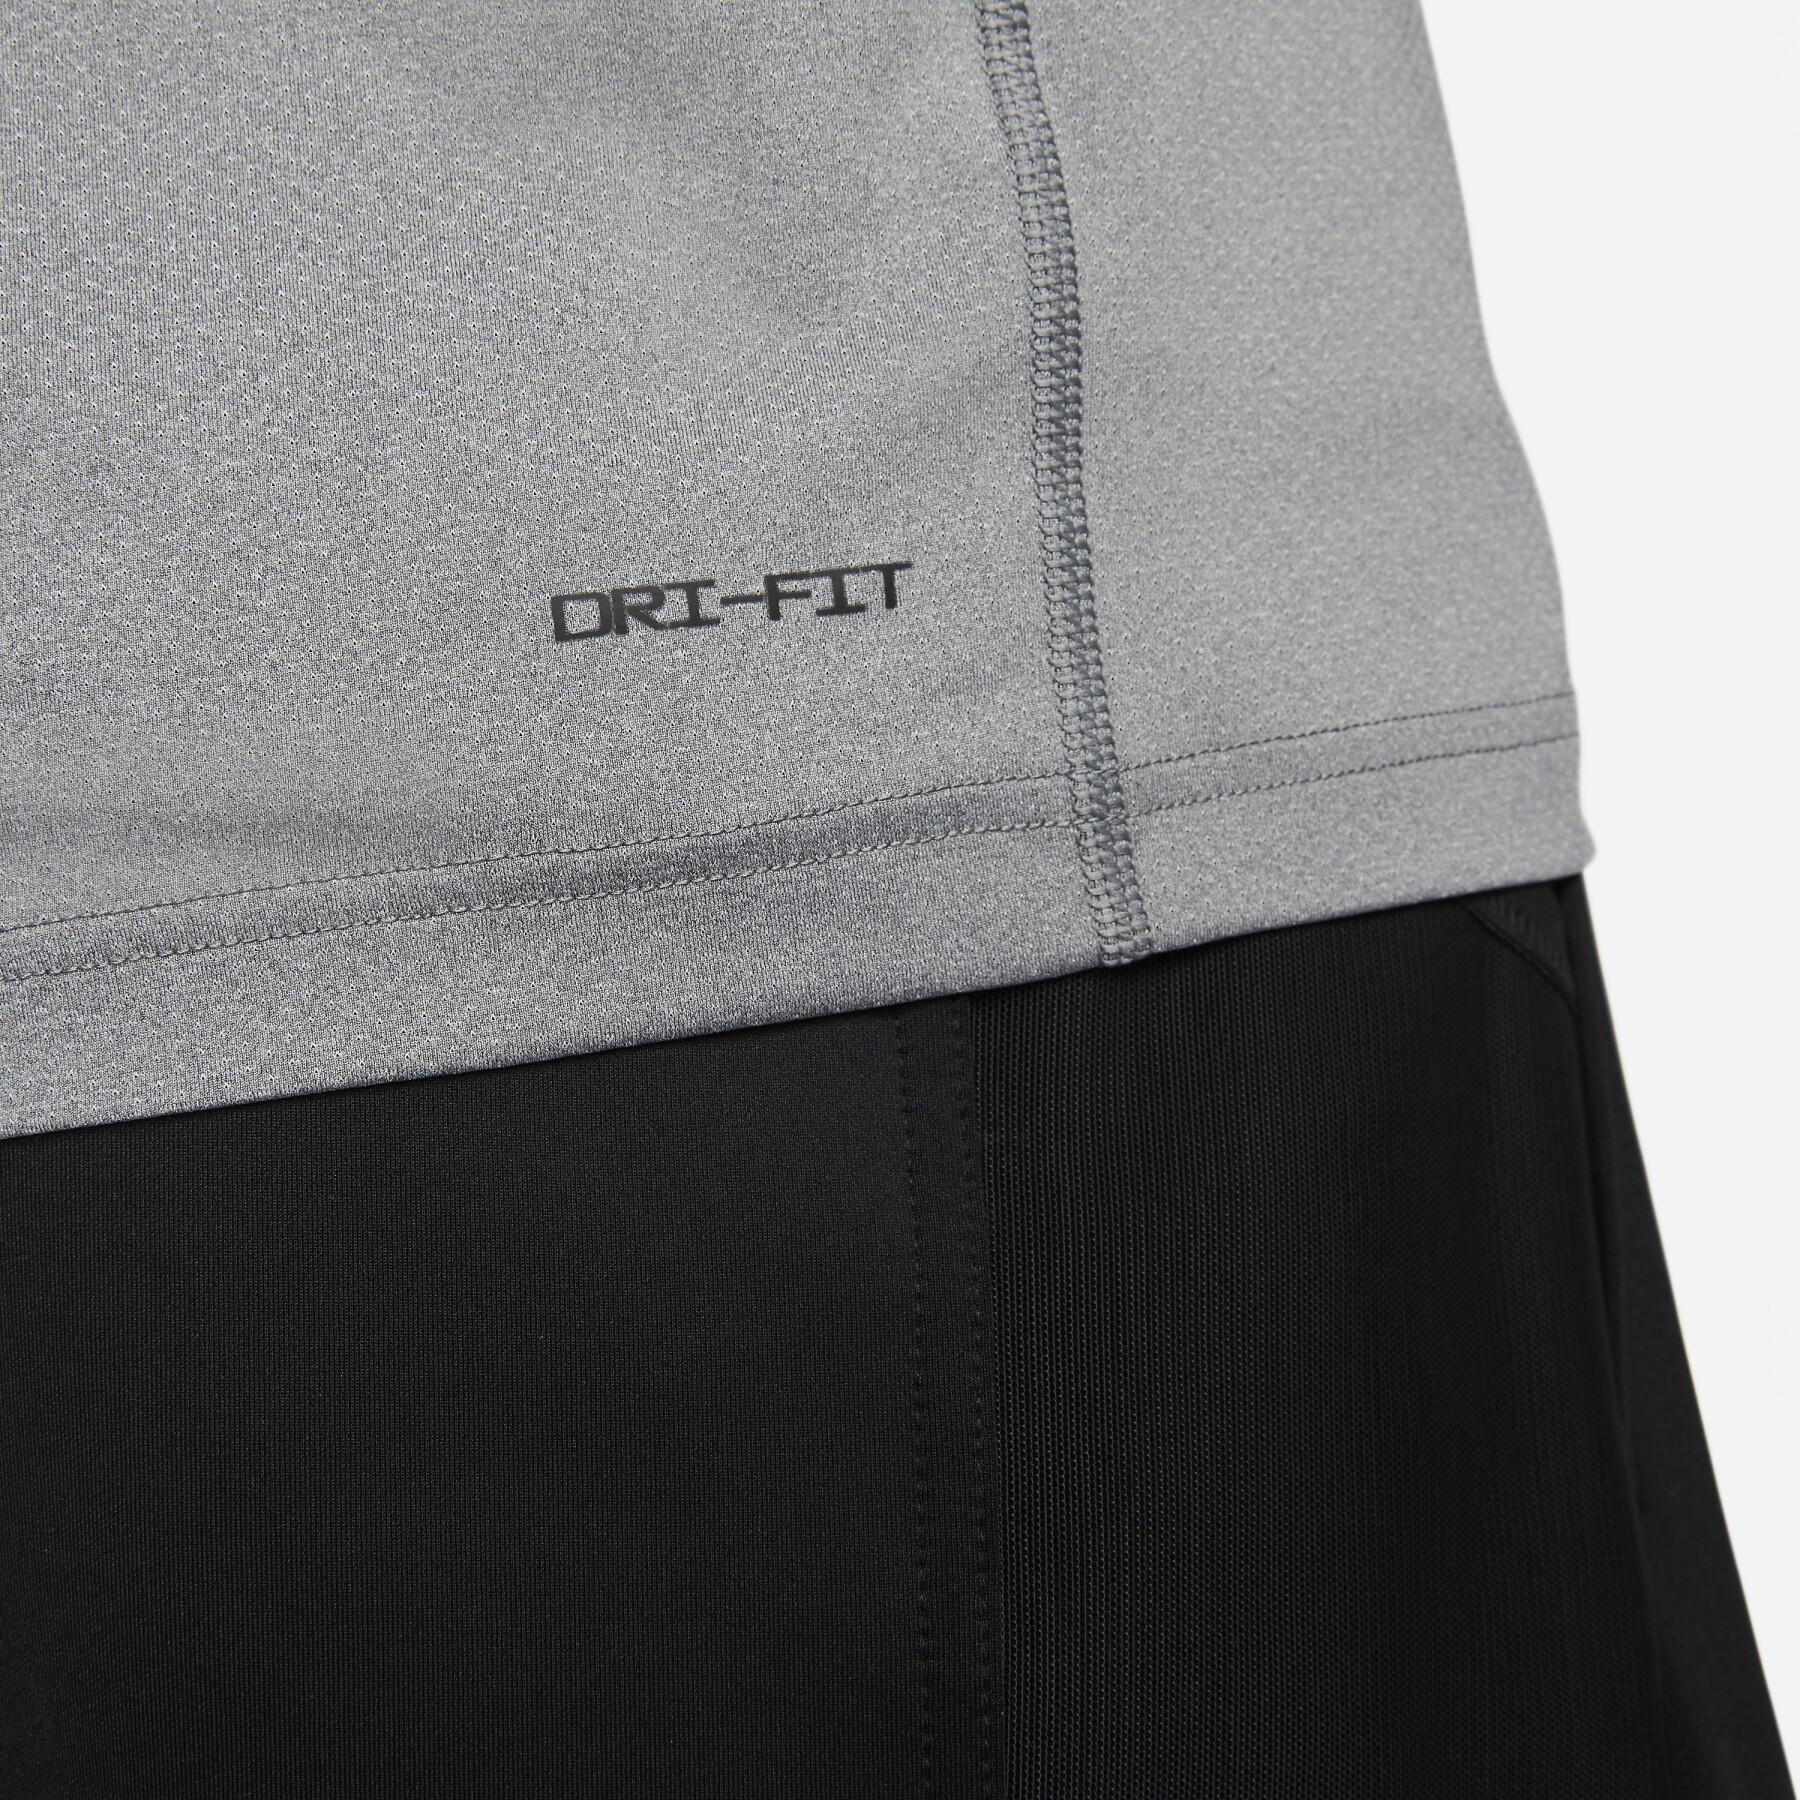 Jersey Nike Dri-FIT Ready - Shirts - Textile - Handball wear